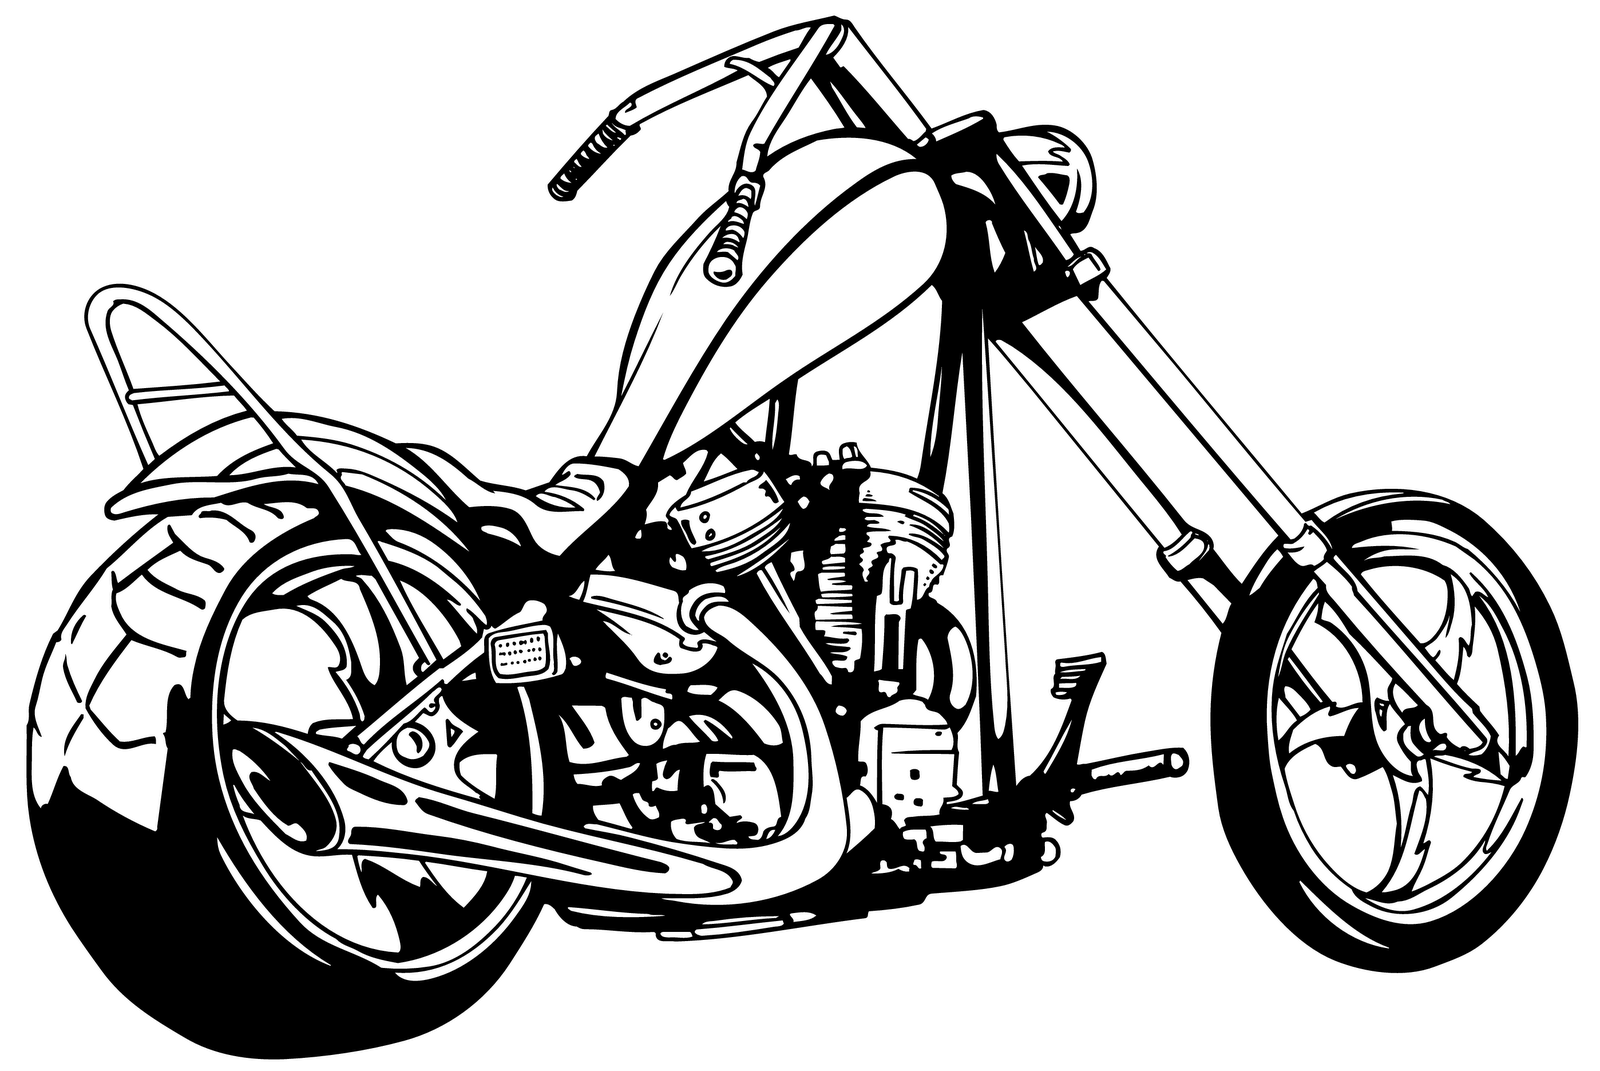 Harley Davidson Clip Art - Images, Illustrations, Photos